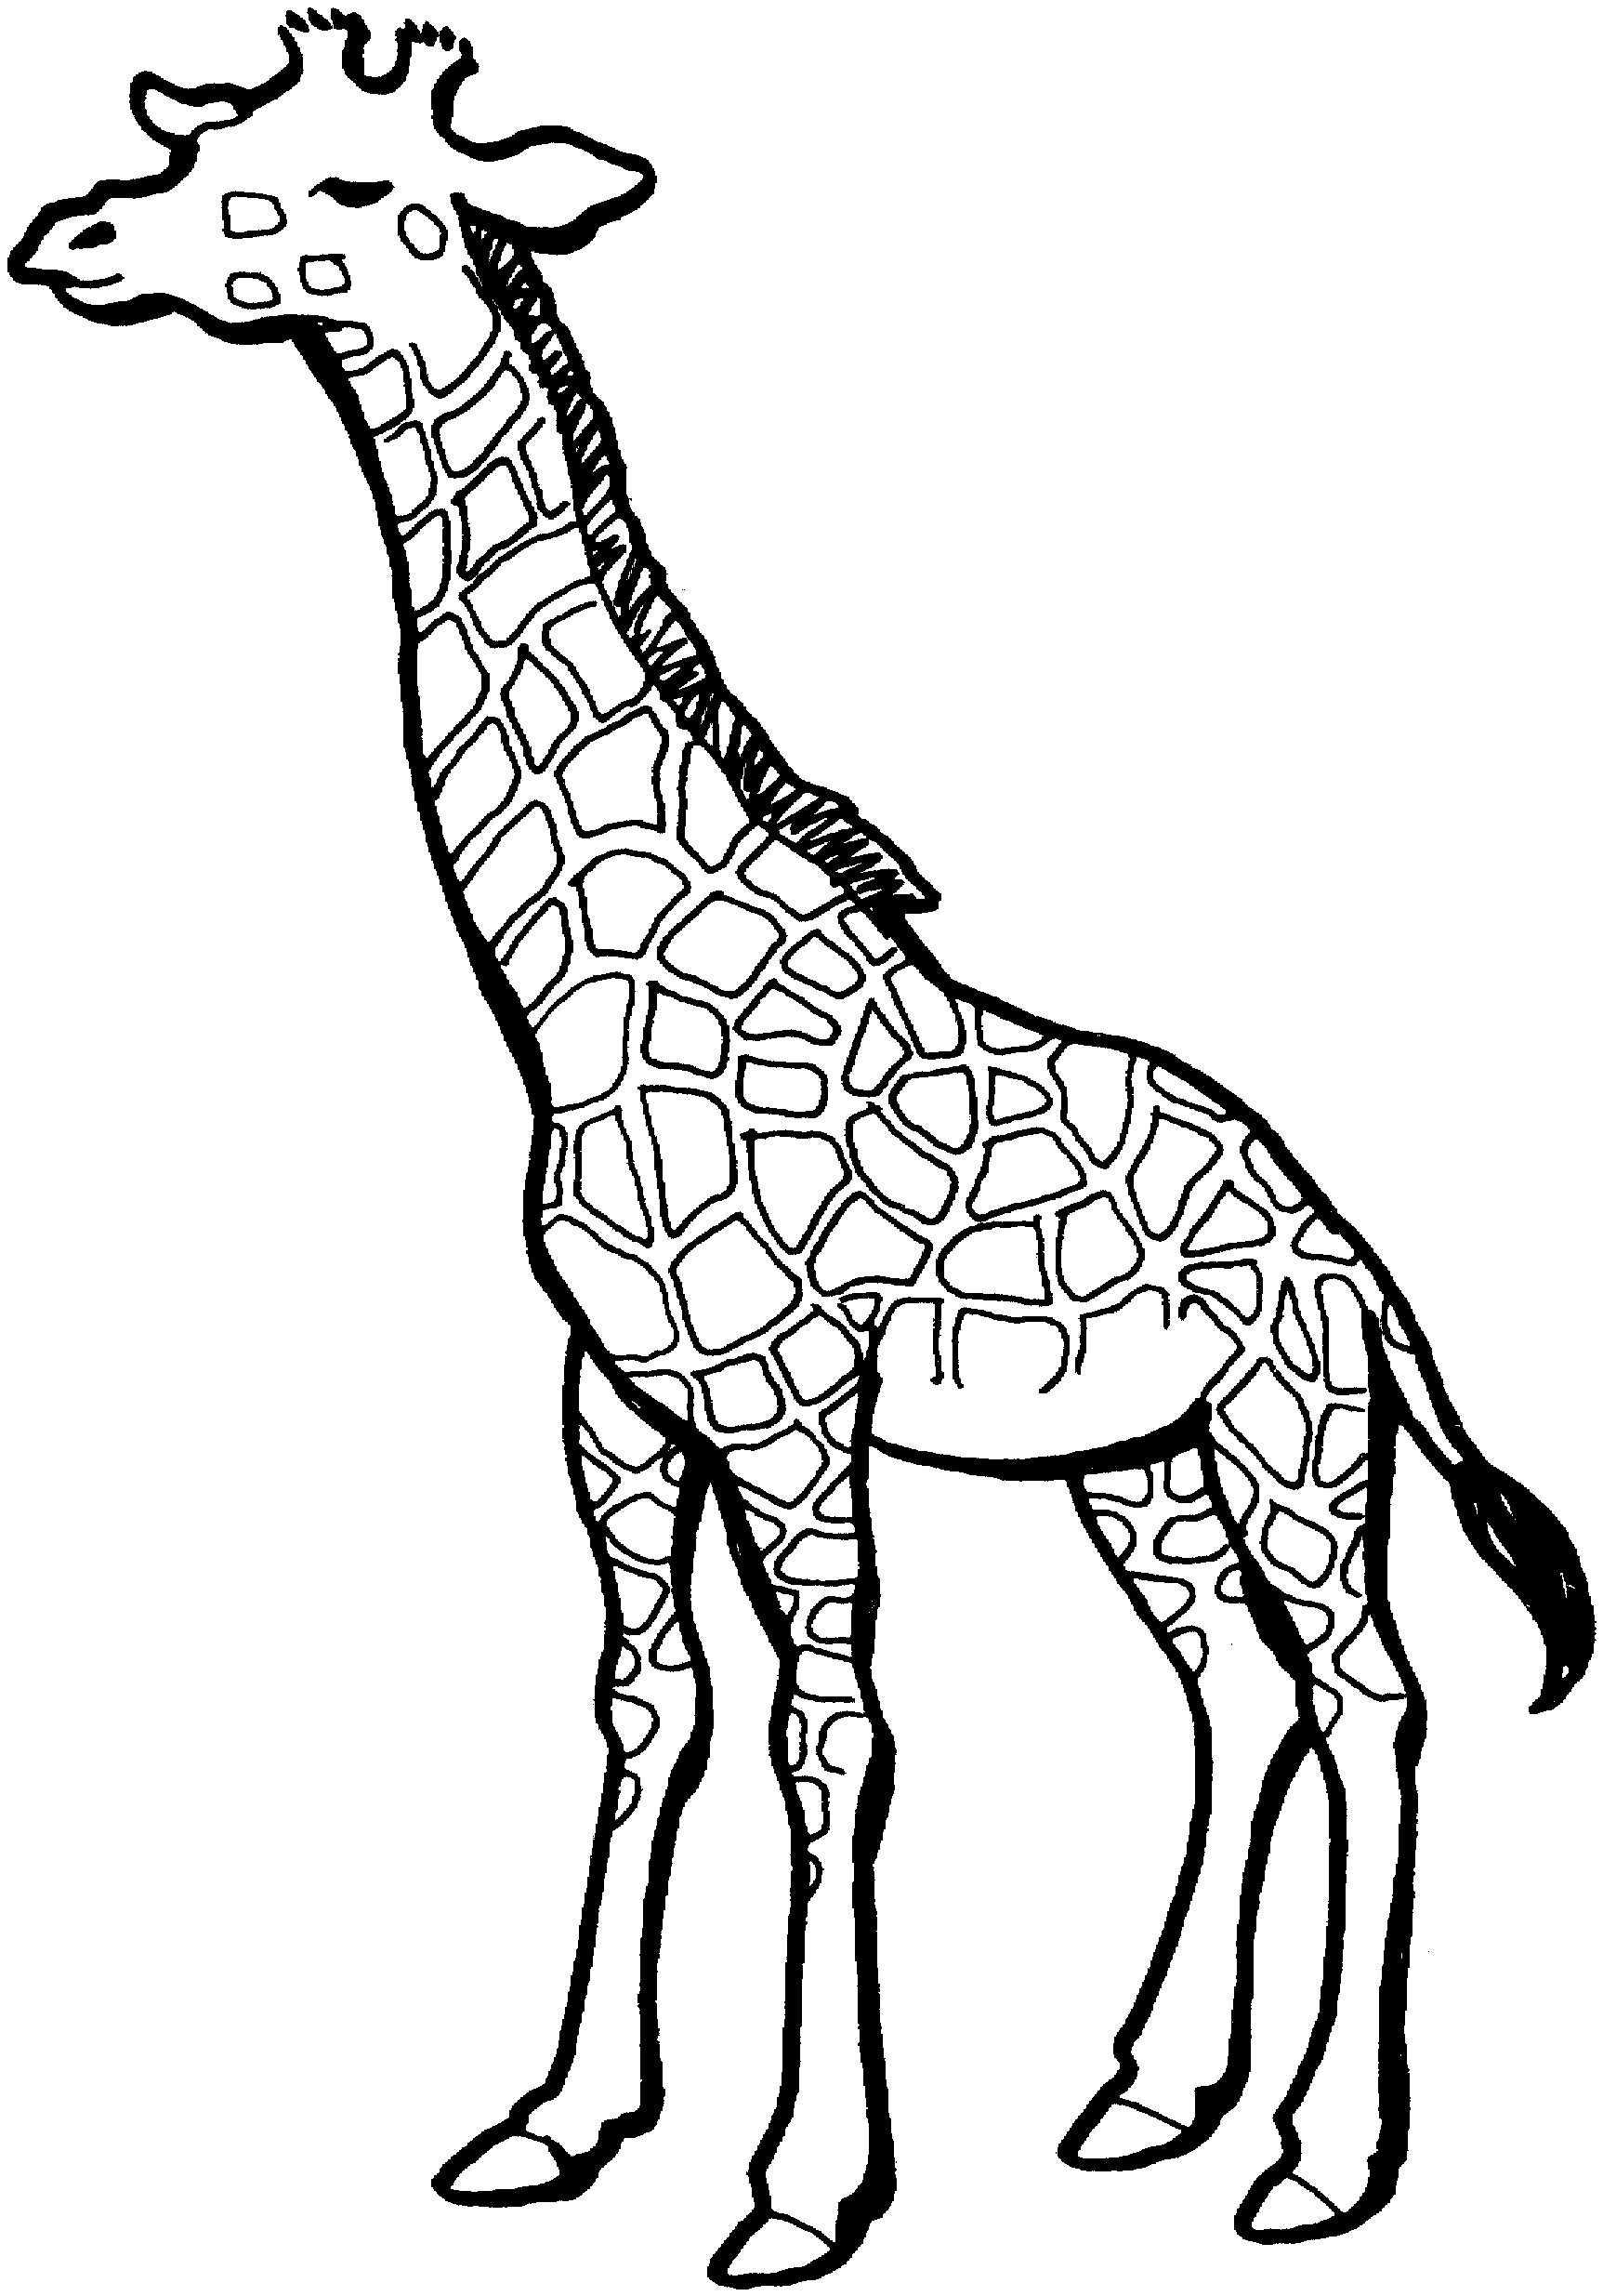 a-to-z-kids-stuff-giraffe-pattern